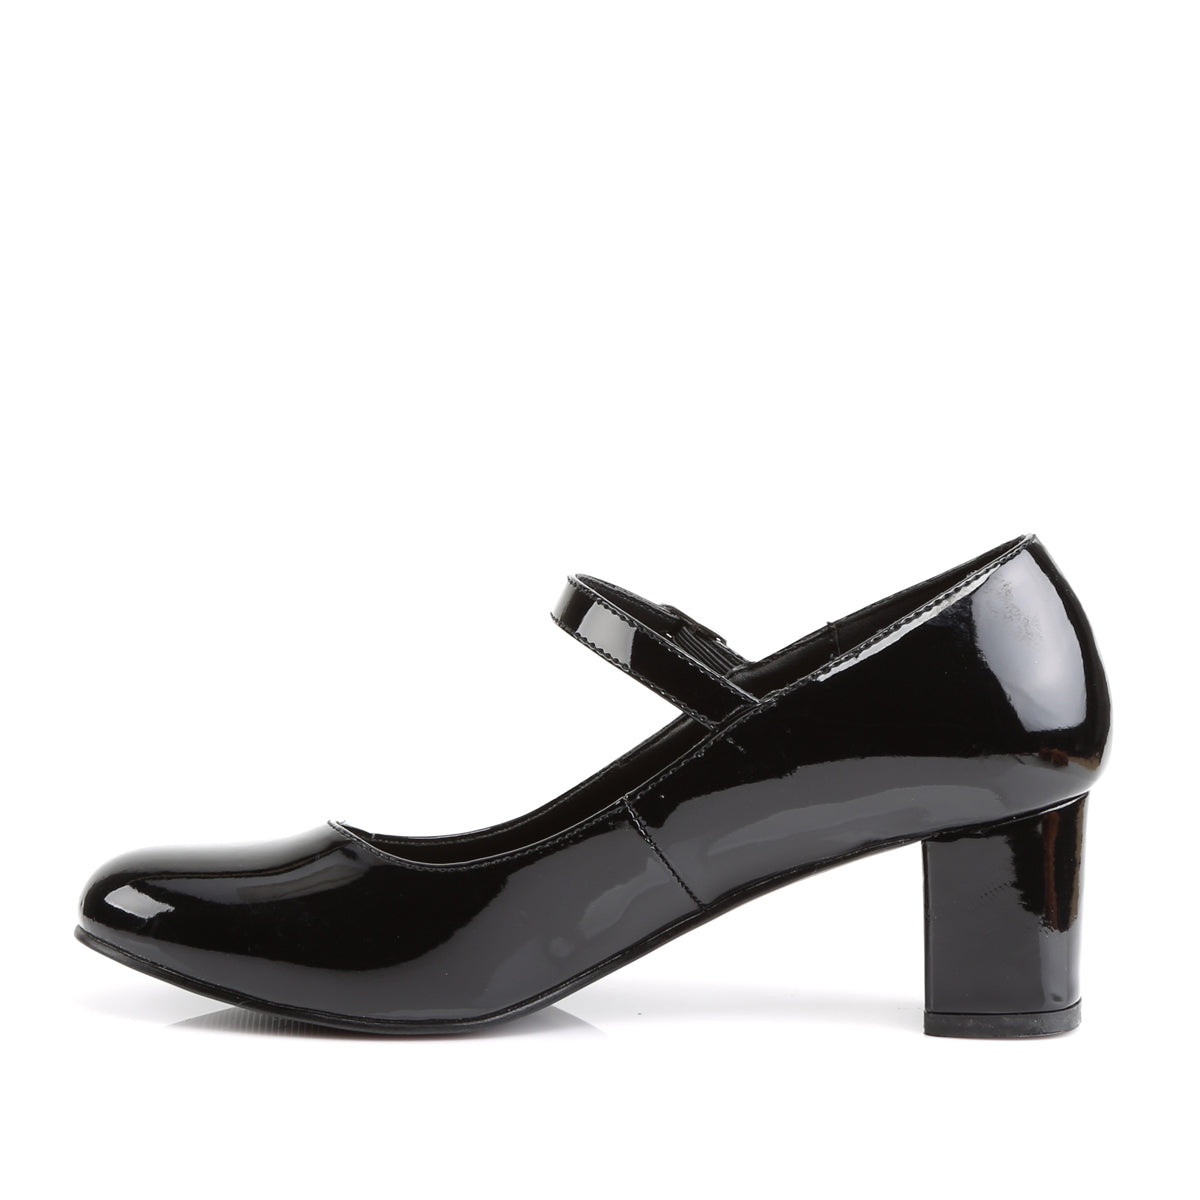 SCHOOLGIRL-50 Funtasma Black Patent Women's Shoes (Fancy Dress Costume Shoes)